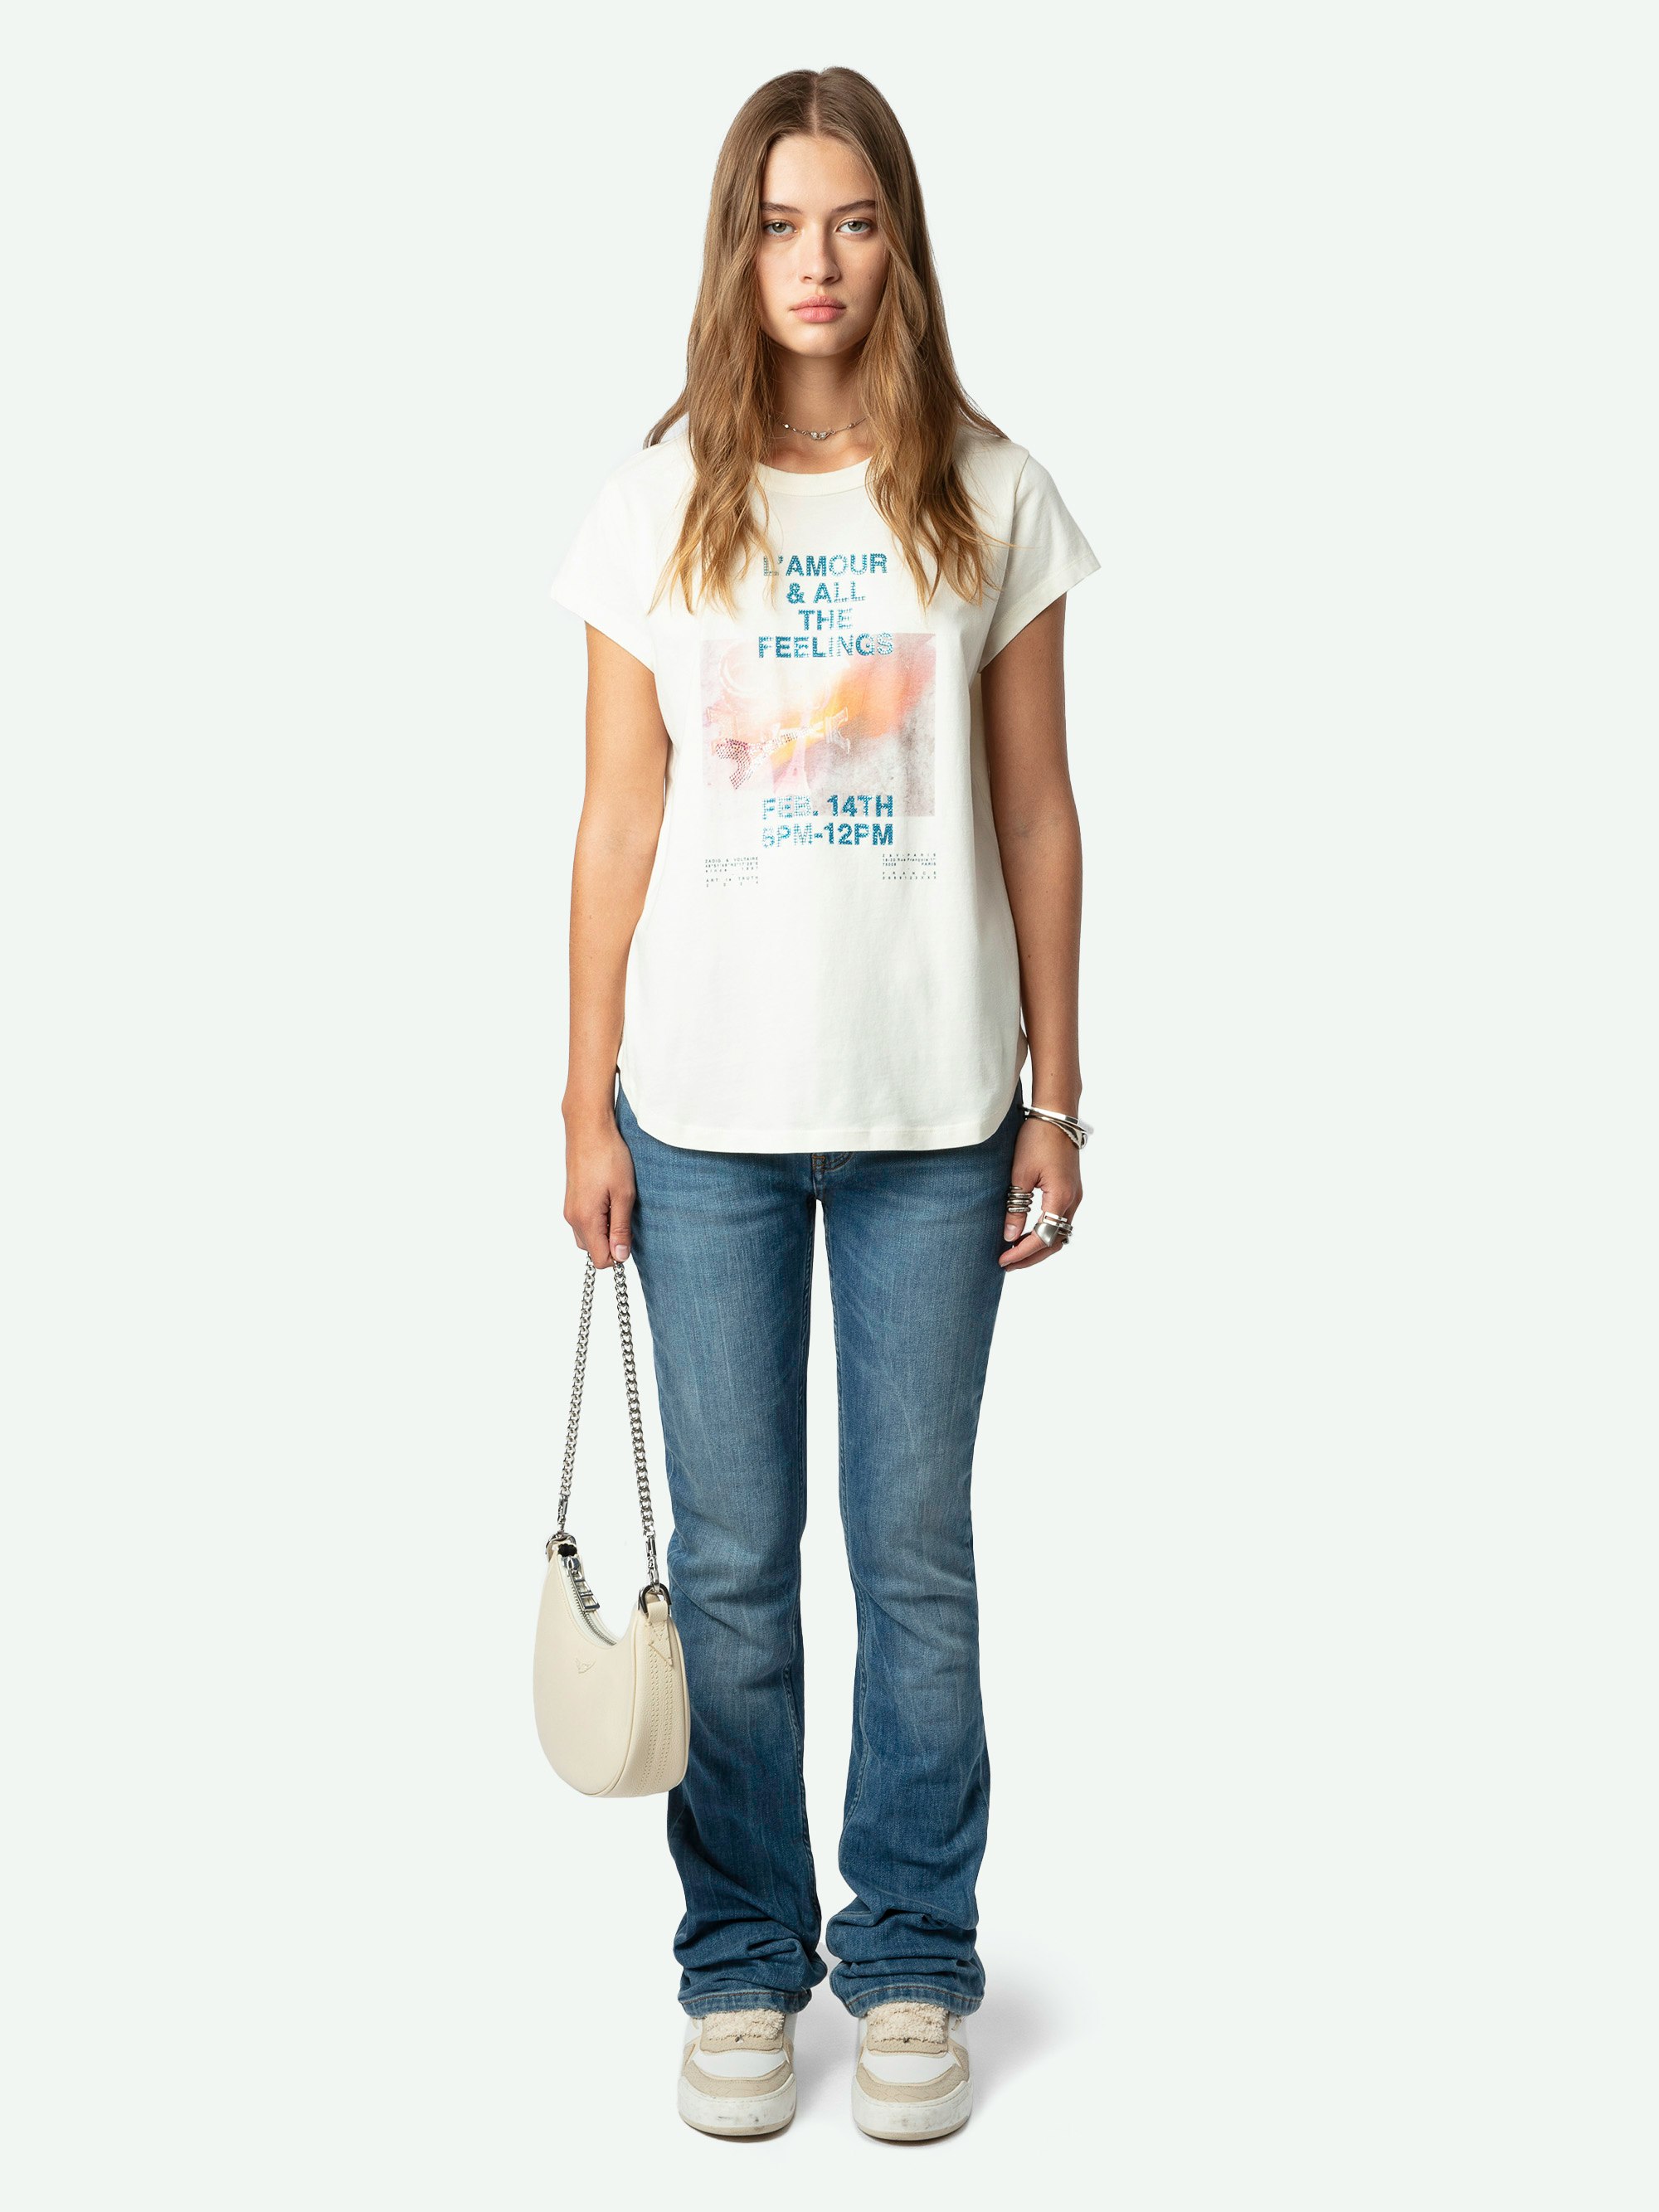 T-Shirt Woop Fotoprint - Kurzärmeliges, weißes T-Shirt aus Bio-Baumwolle mit Charms-Fotoprint und strassverziertem „L'Amour & All The Feelings“-Schriftzug.